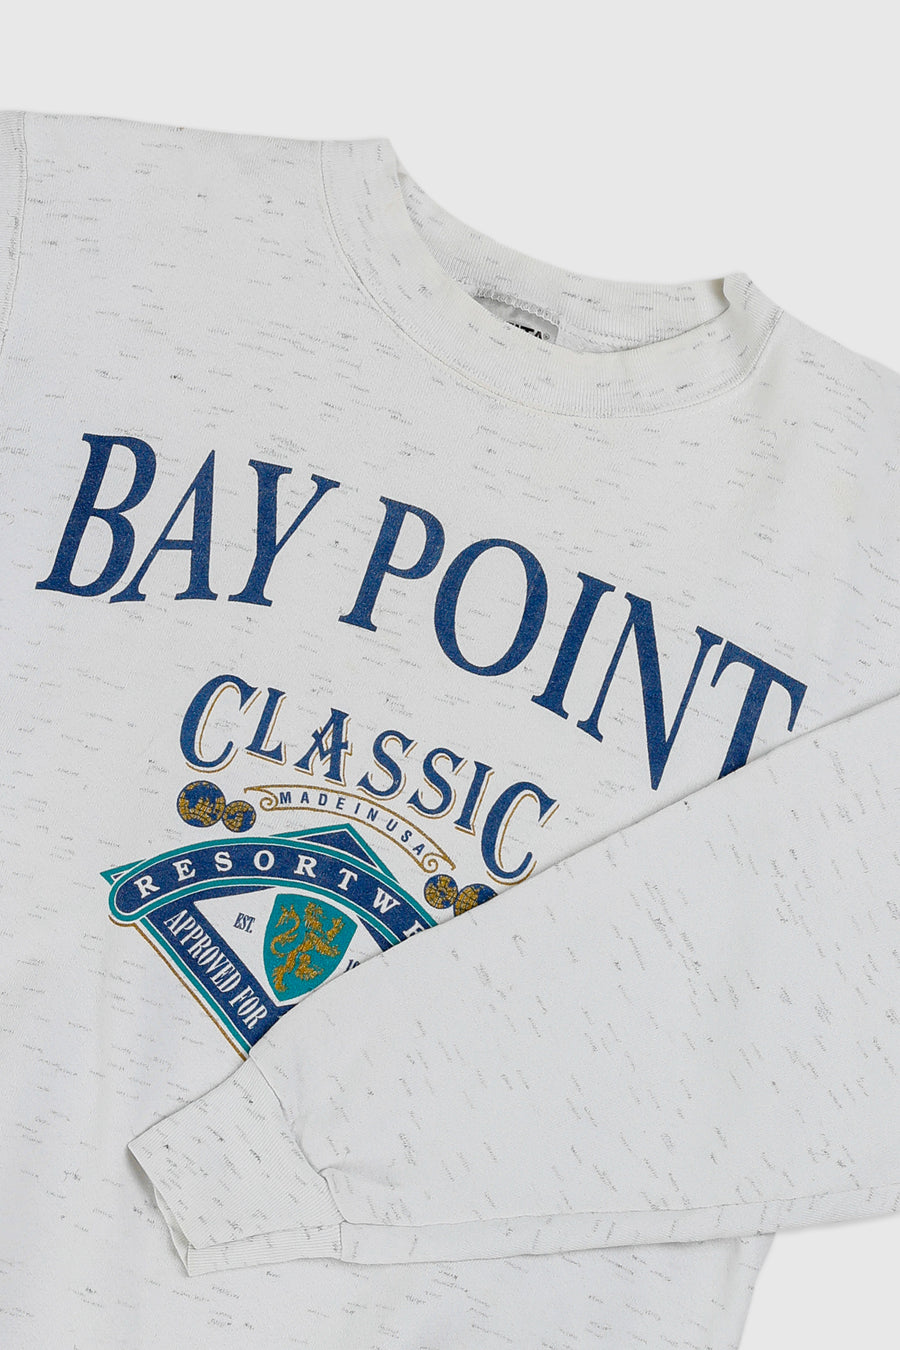 Vintage Bay Point Sweatshirt - M